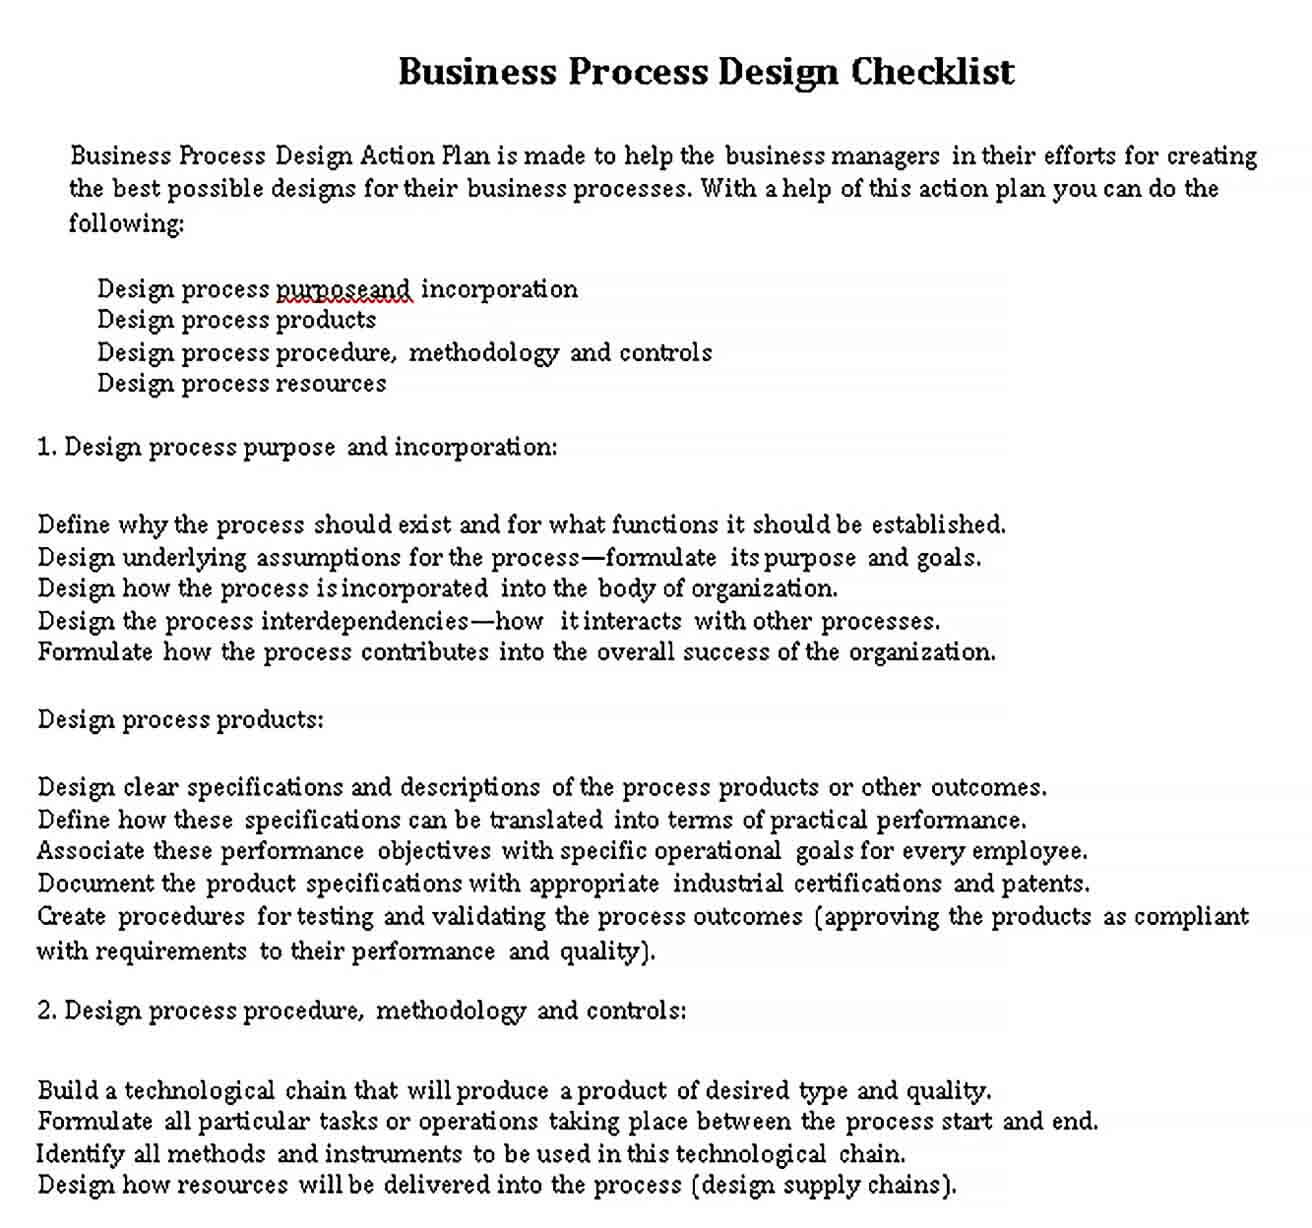 Sample Business Process Checklist